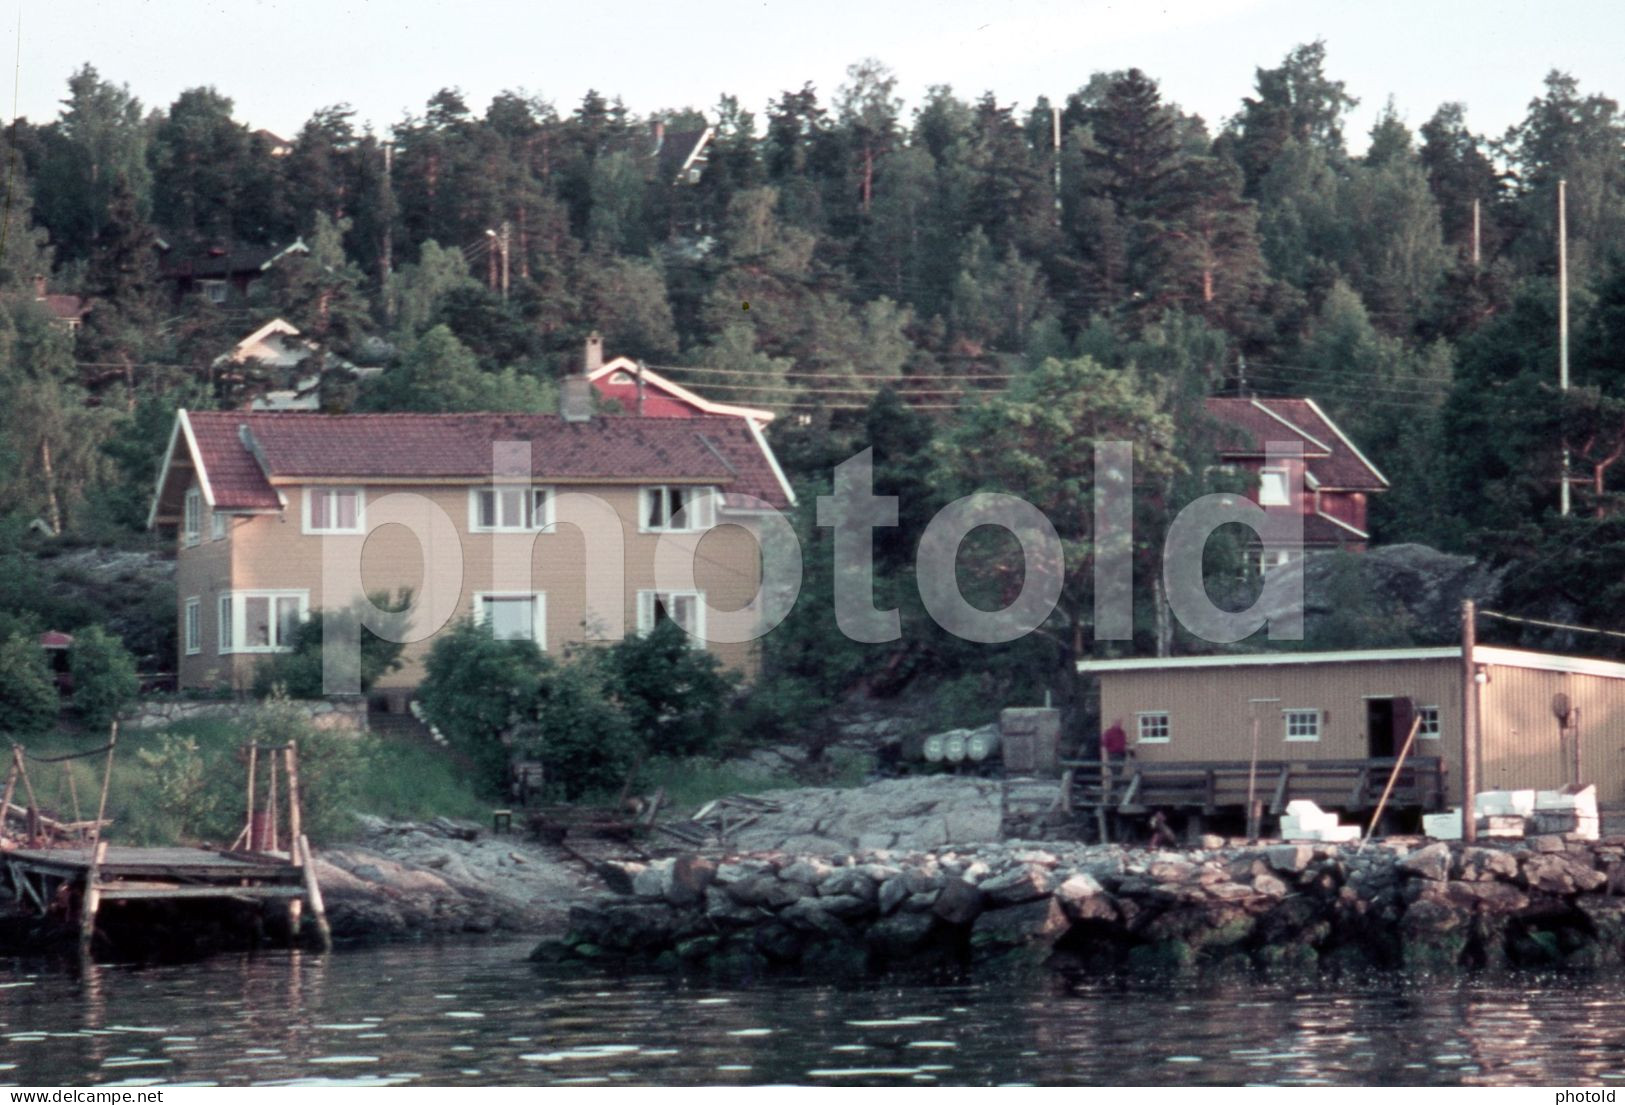 12 SLIDES SET 1977 OSLO NORWAY FJORDER NORGE AMATEUR 35mm SLIDE PHOTO 35mm DIAPOSITIVE SLIDE Not PHOTO No FOTO NB4105 - Diapositives (slides)